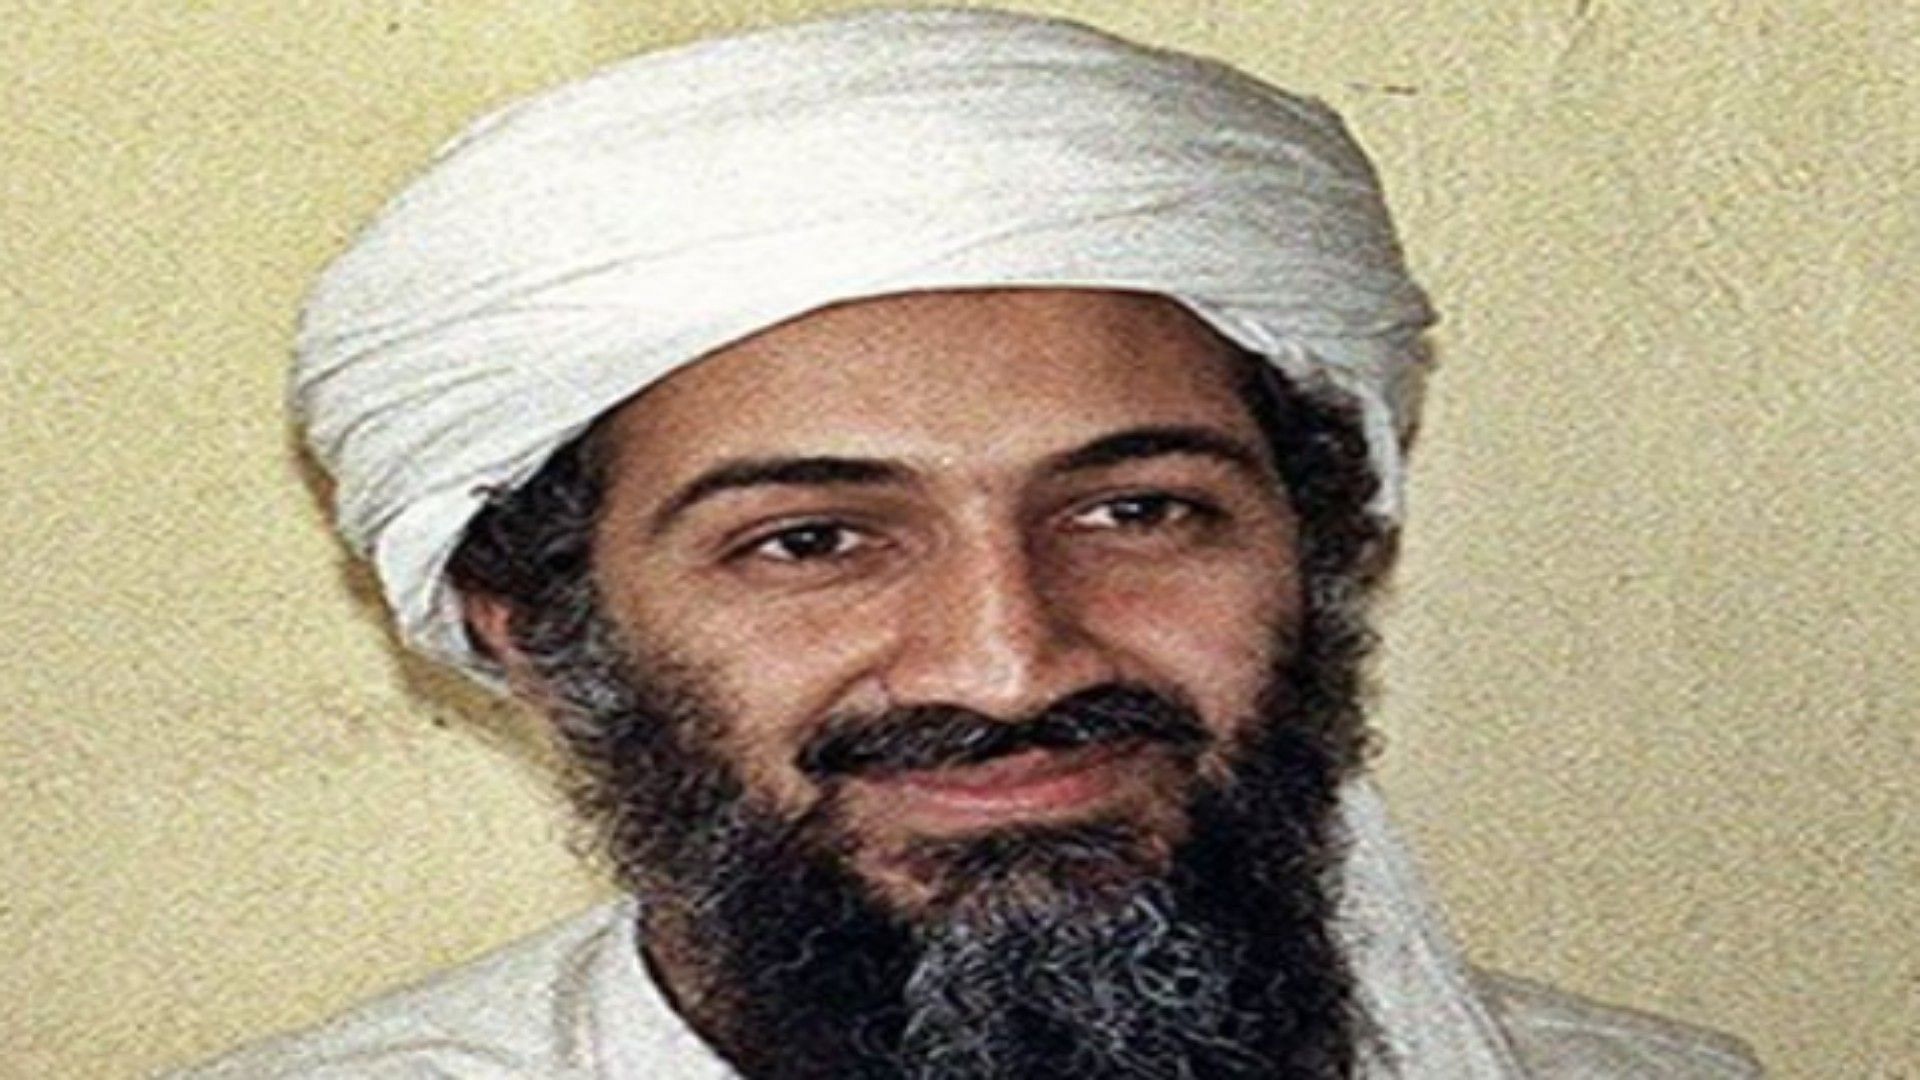 Osama Bin Laden (Image via Farees/X)